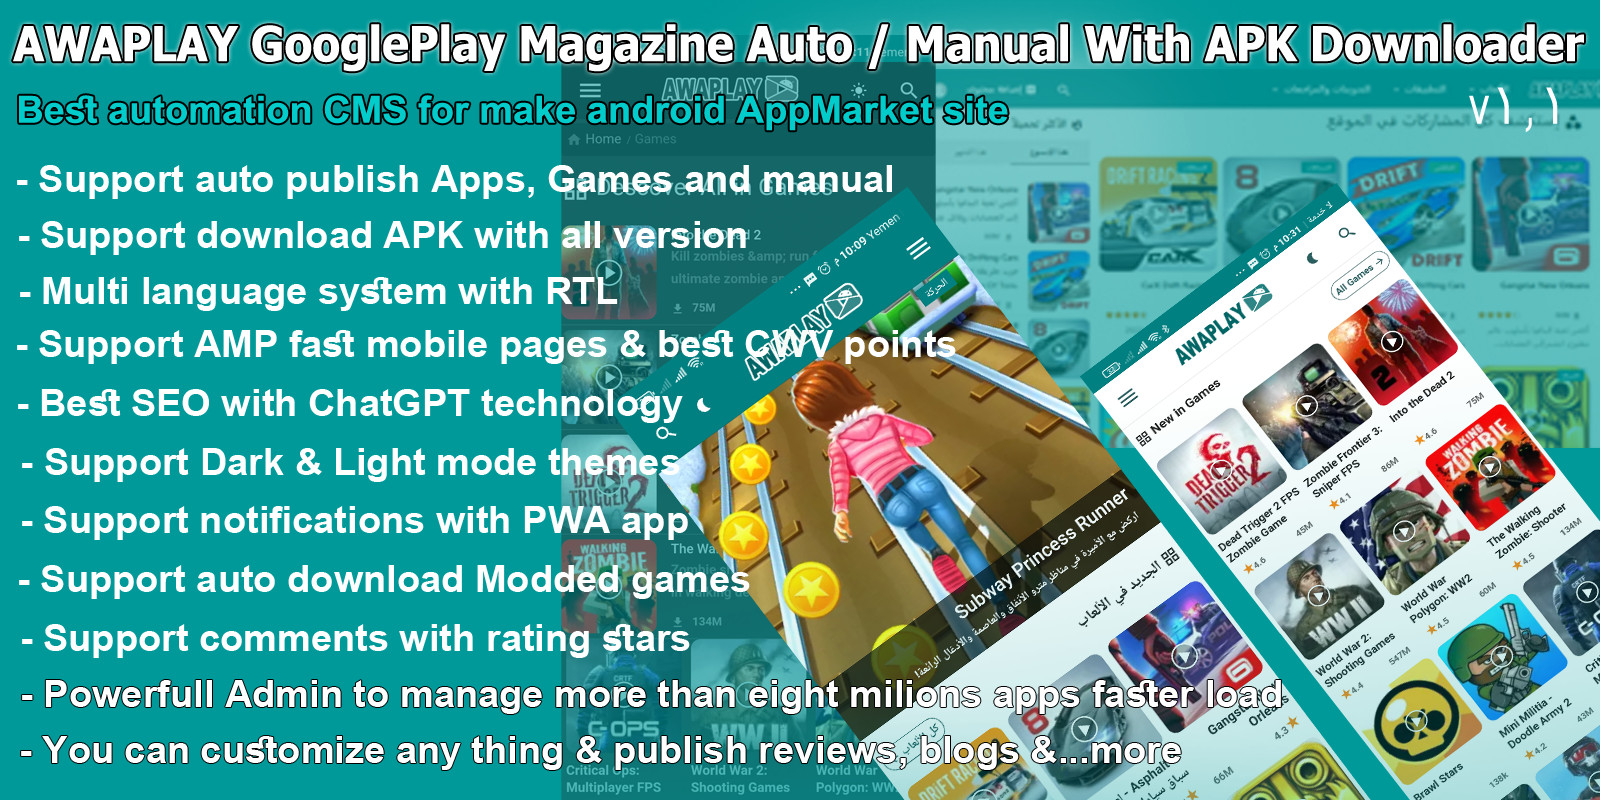 AWAPLAY GooglePlay Magazine Auto - APK Downloader